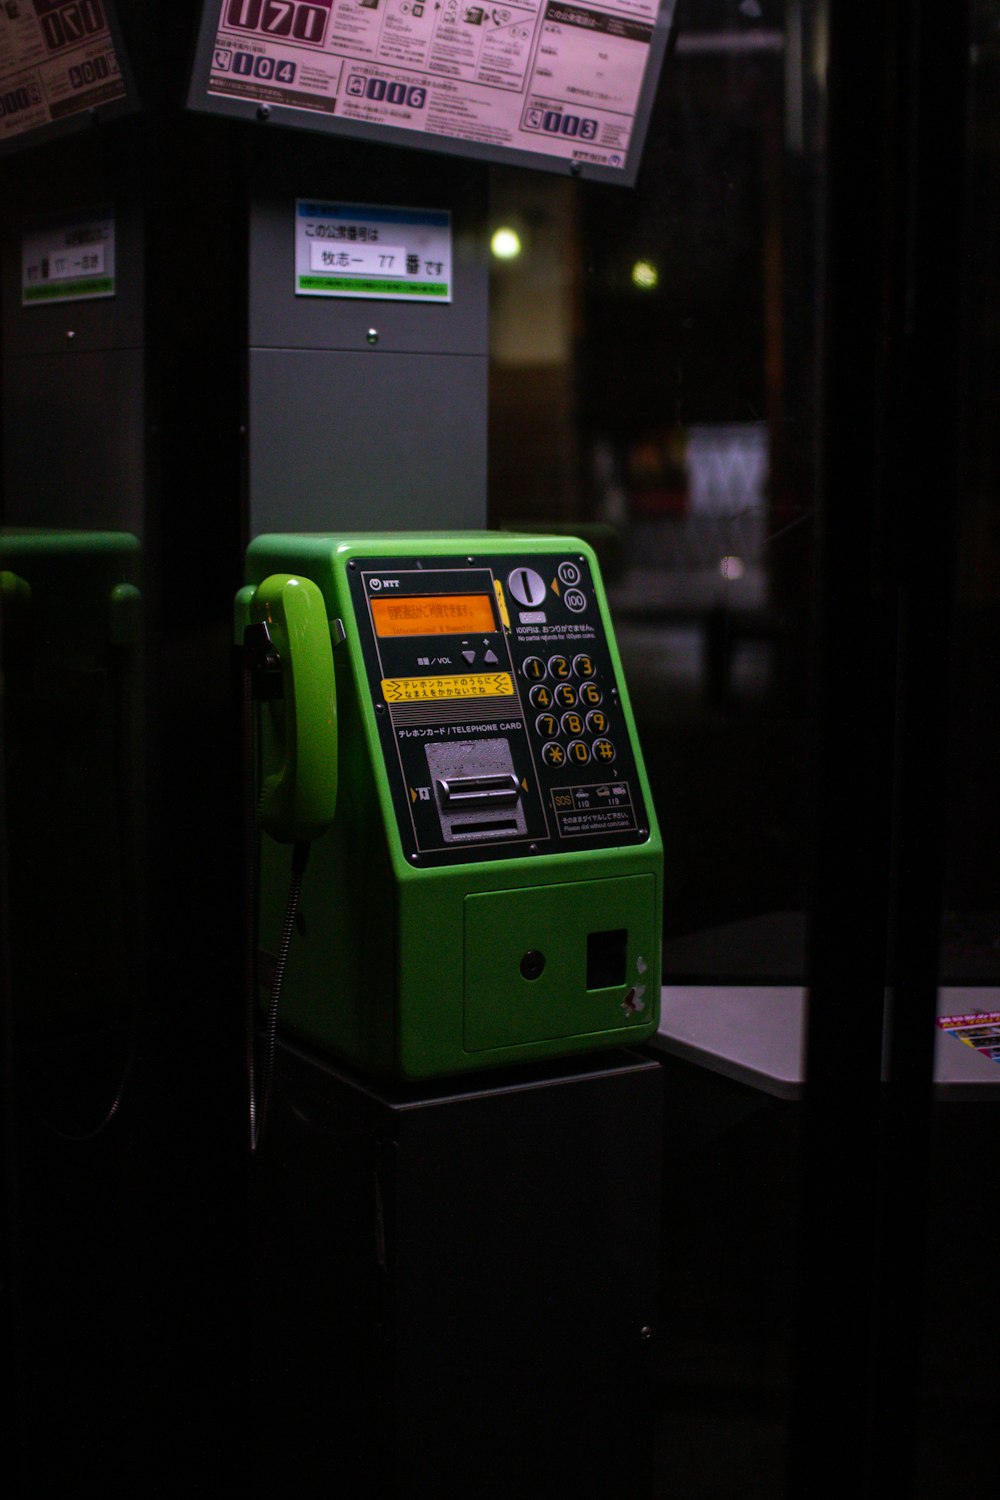 a green machine sitting next to a parking meter